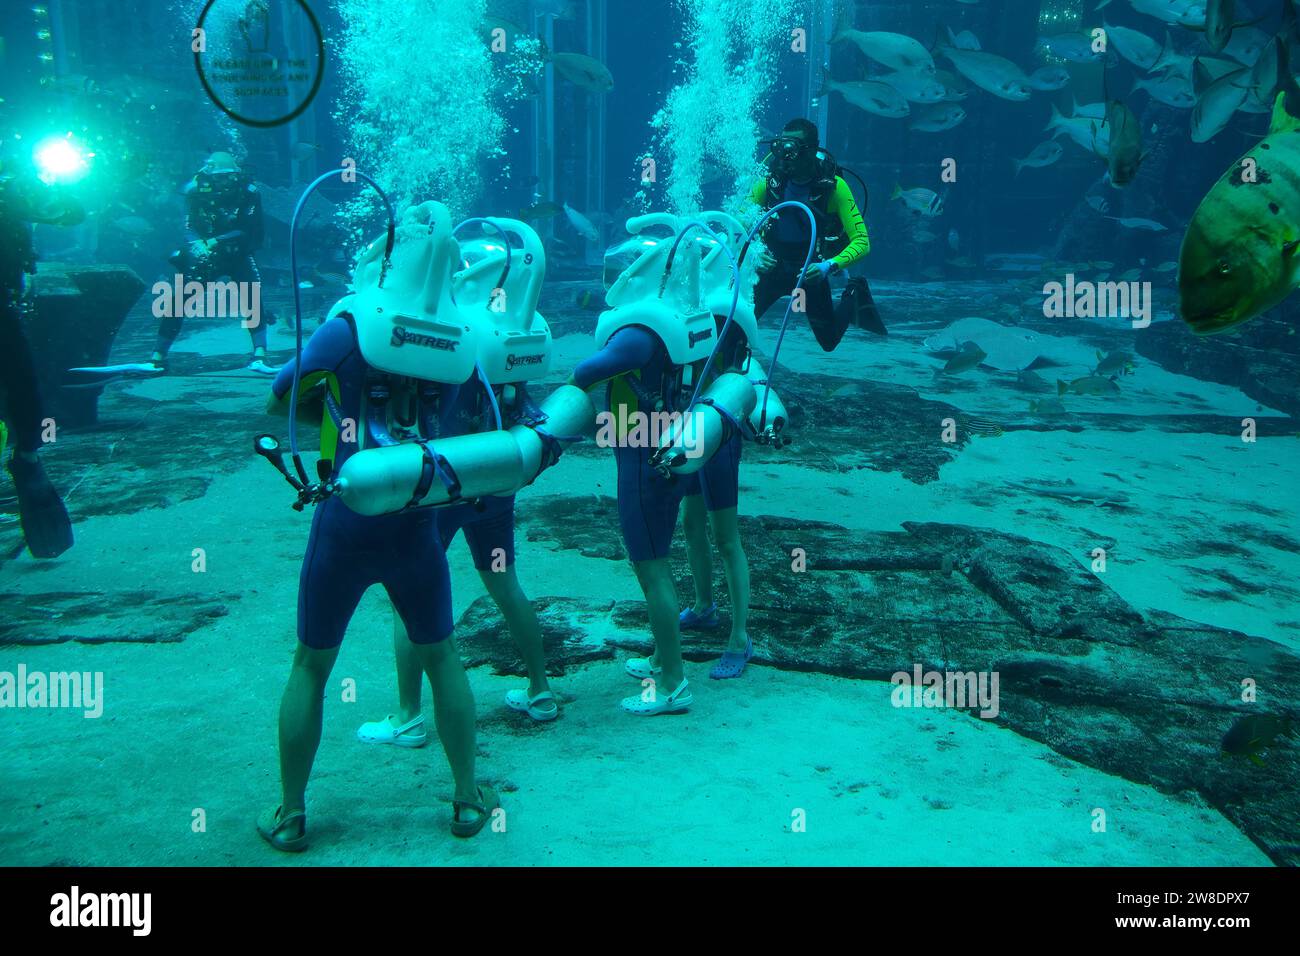 Scuba divers in the Ambassador Lagoon of The Lost Chambers Aquarium at Atlantis The Palm, Dubai, United Arab Emirates Stock Photo